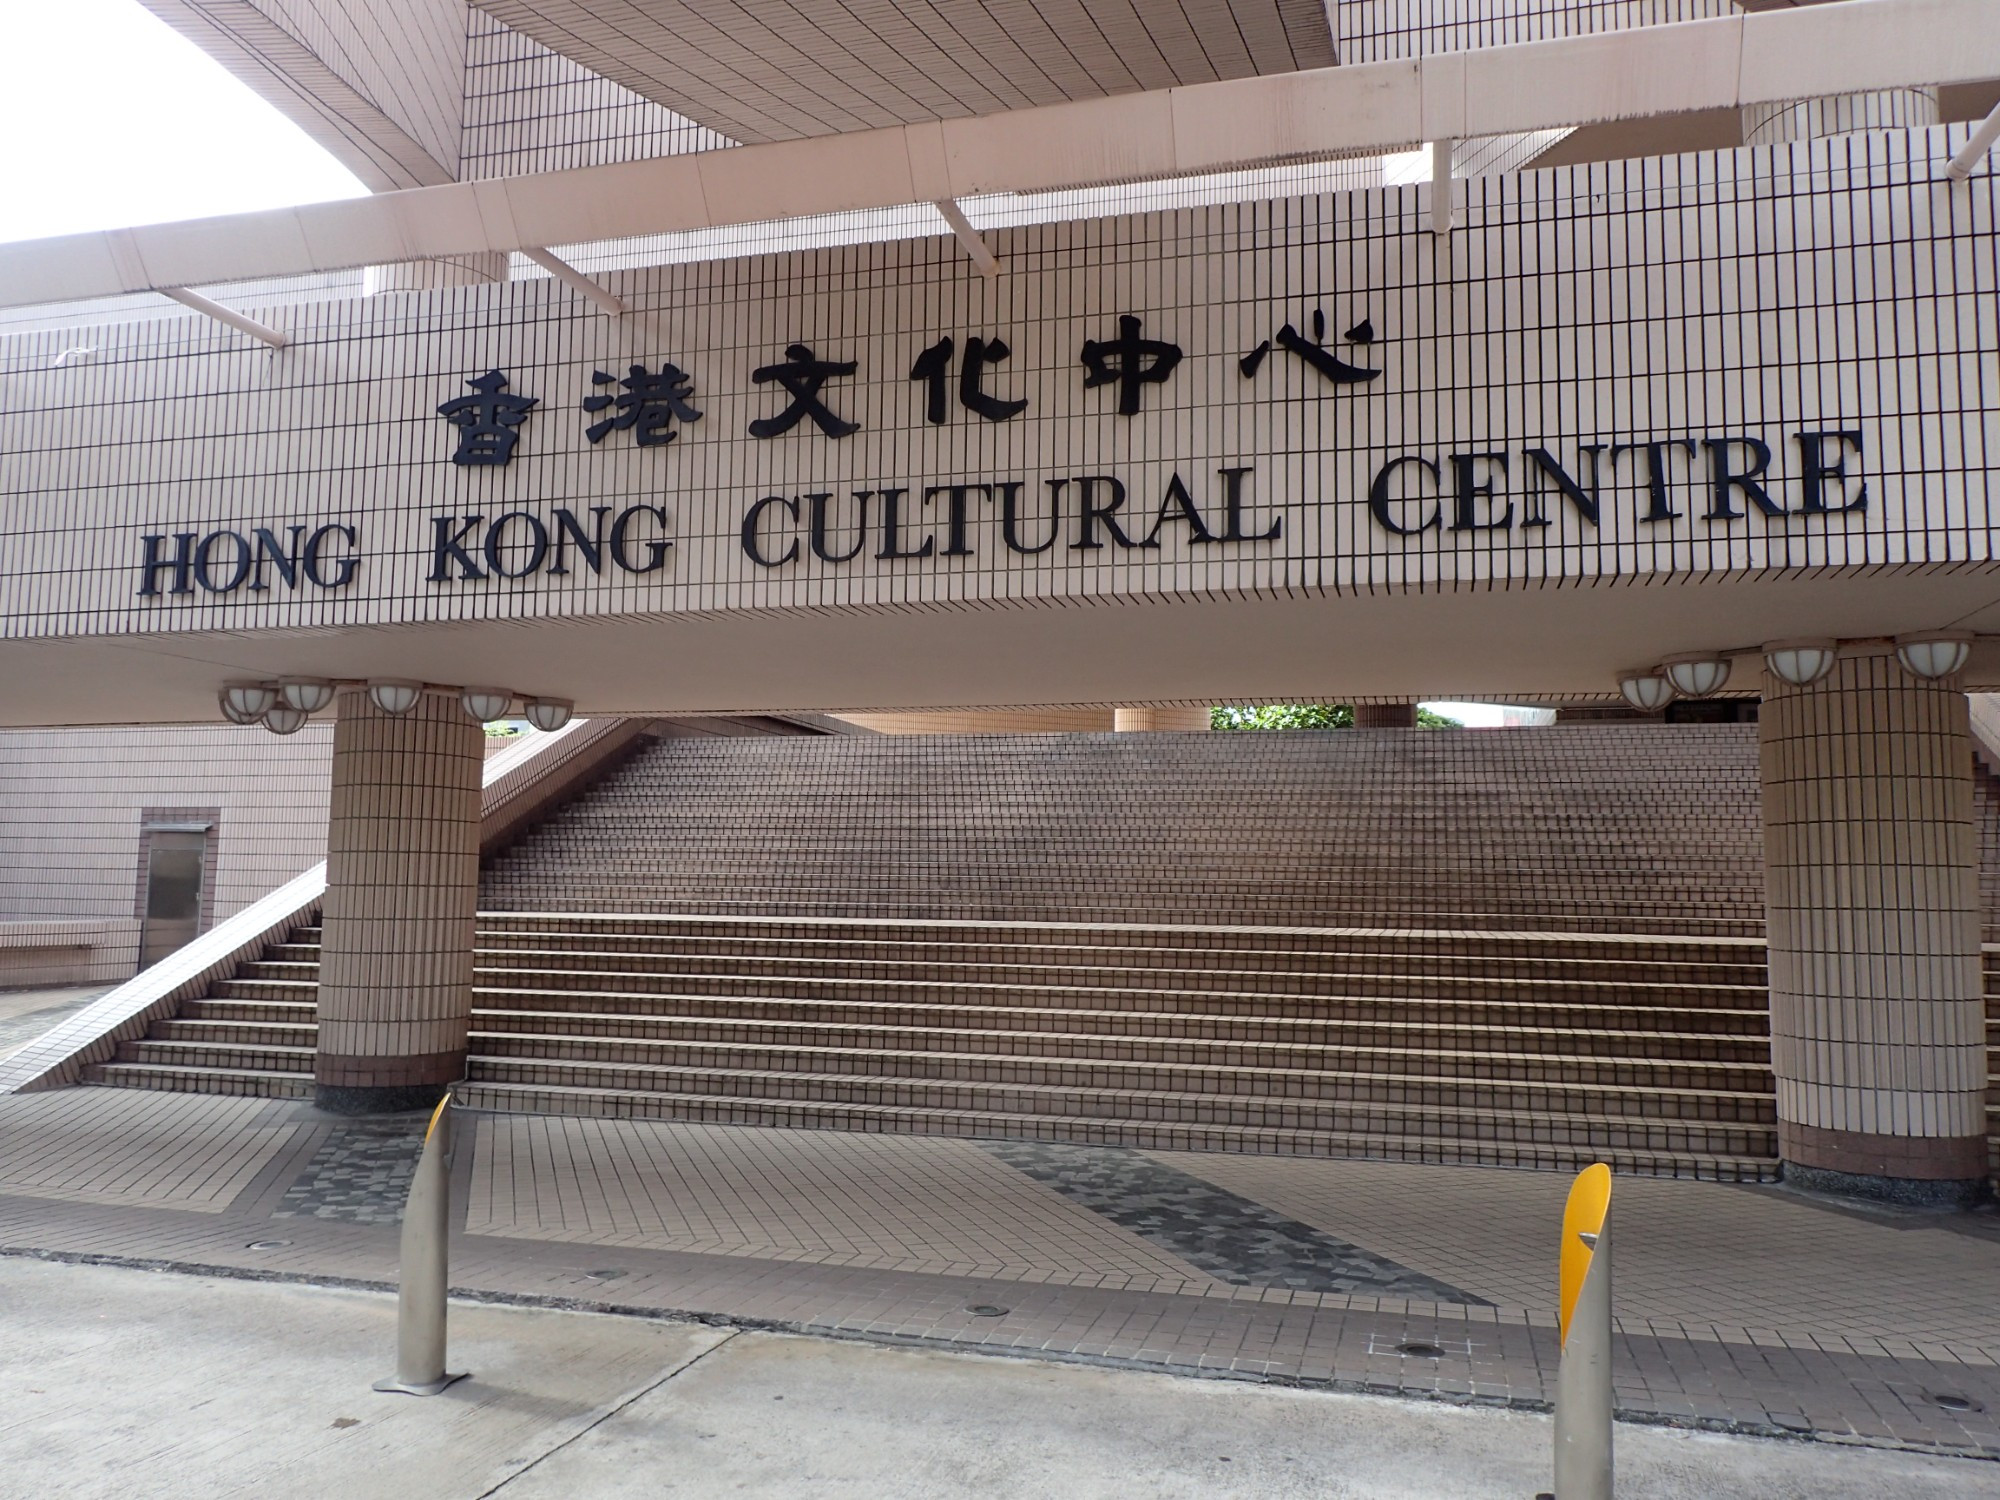 Hong Kong Cultural Centre, Гонконг